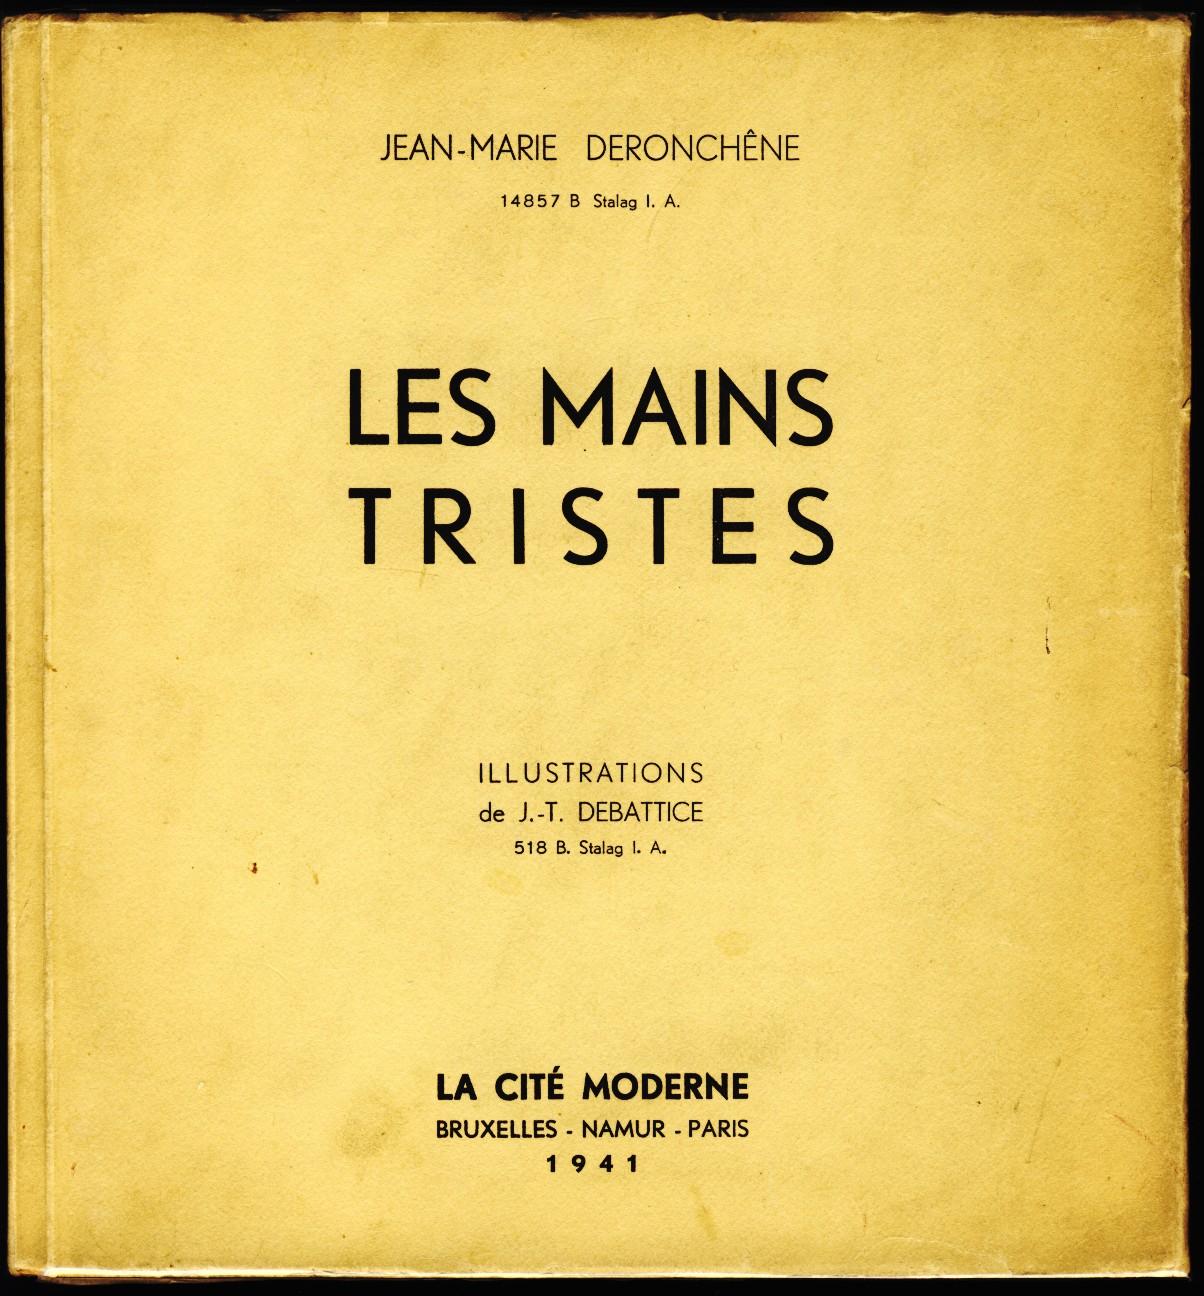 Jean-Marie Deronchene